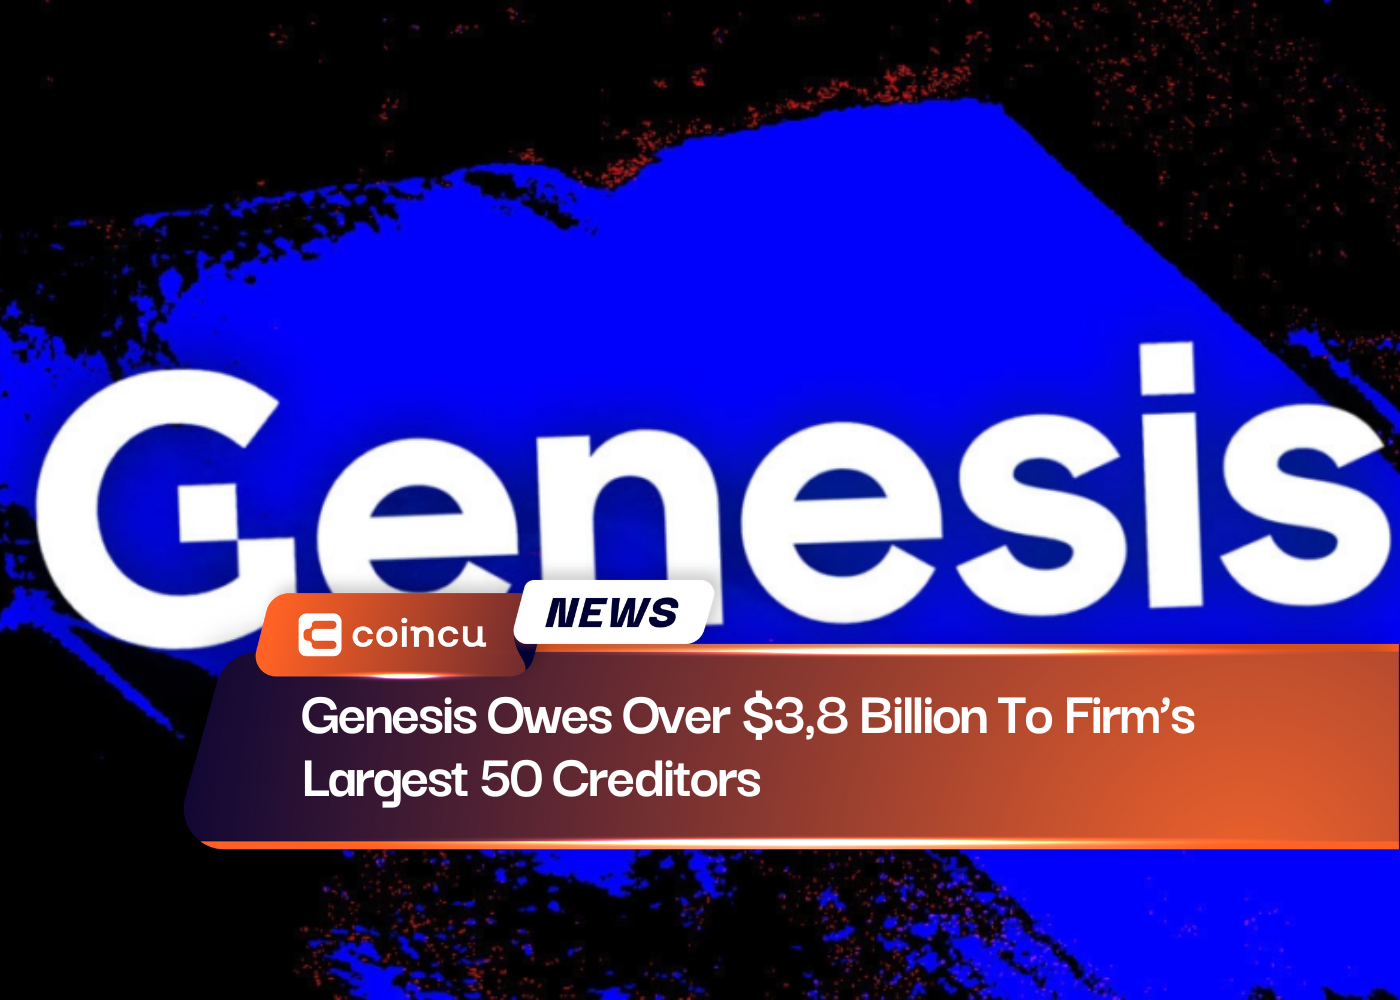 Genesis задолжала более 3,8 миллиарда долларов 50 крупнейшим кредиторам фирмы